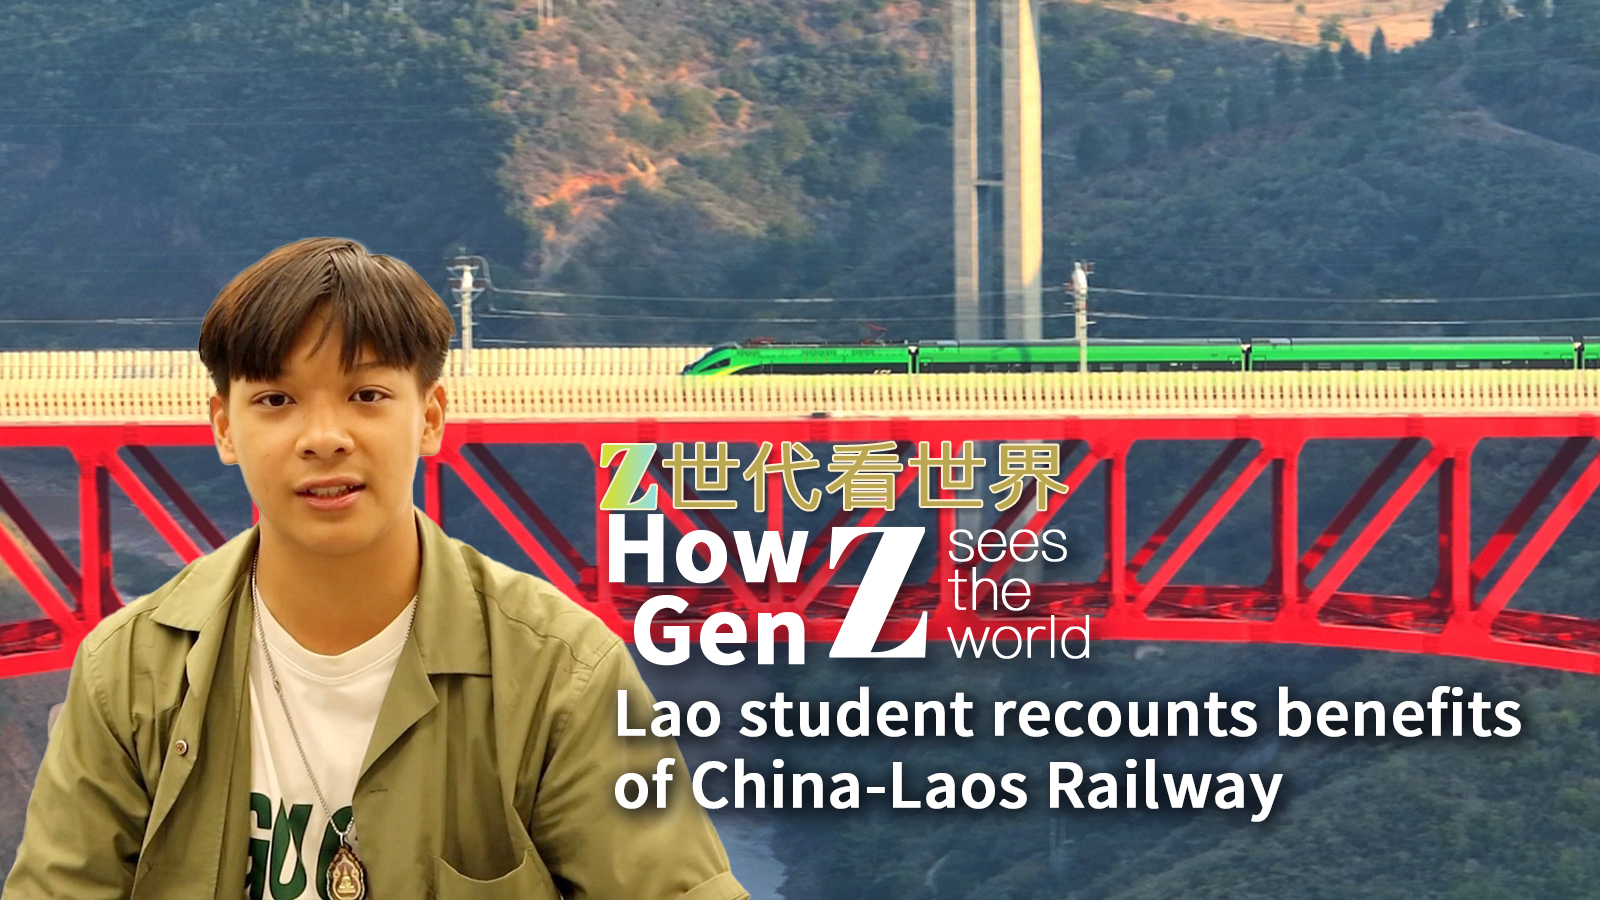 Lao student recounts benefits of China-Laos Railway